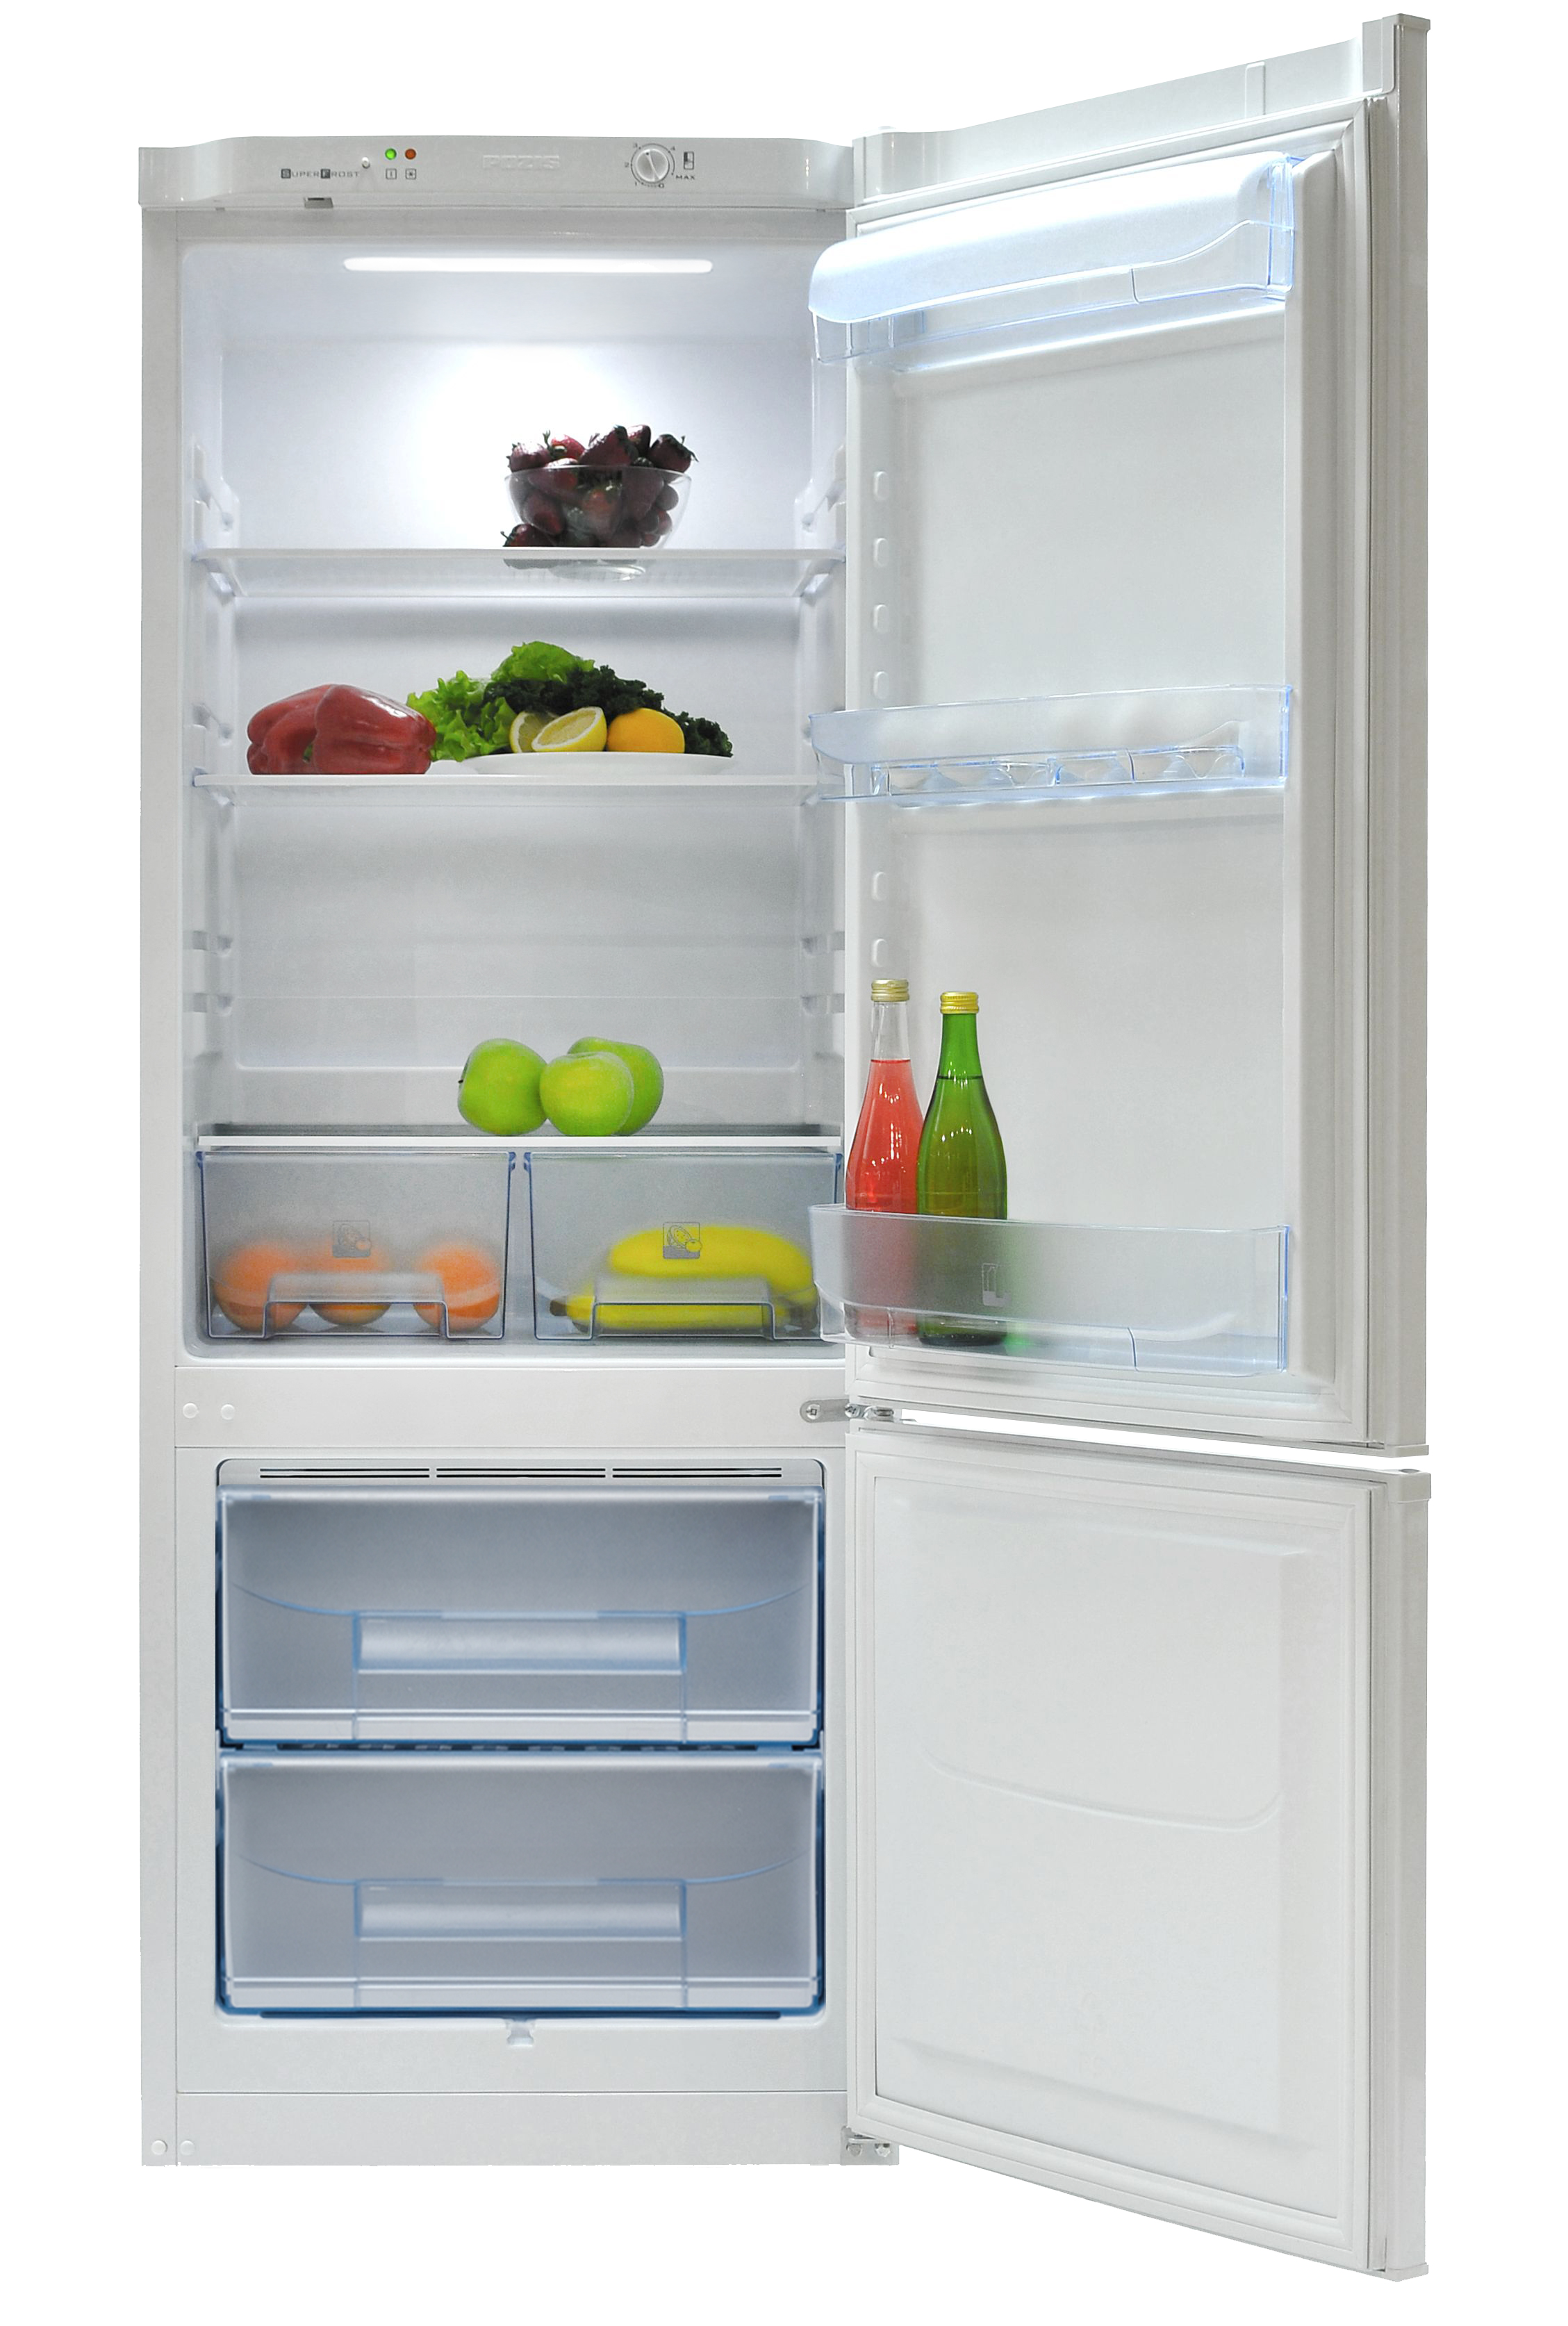 POZIS RK-102 бежевый Холодильник